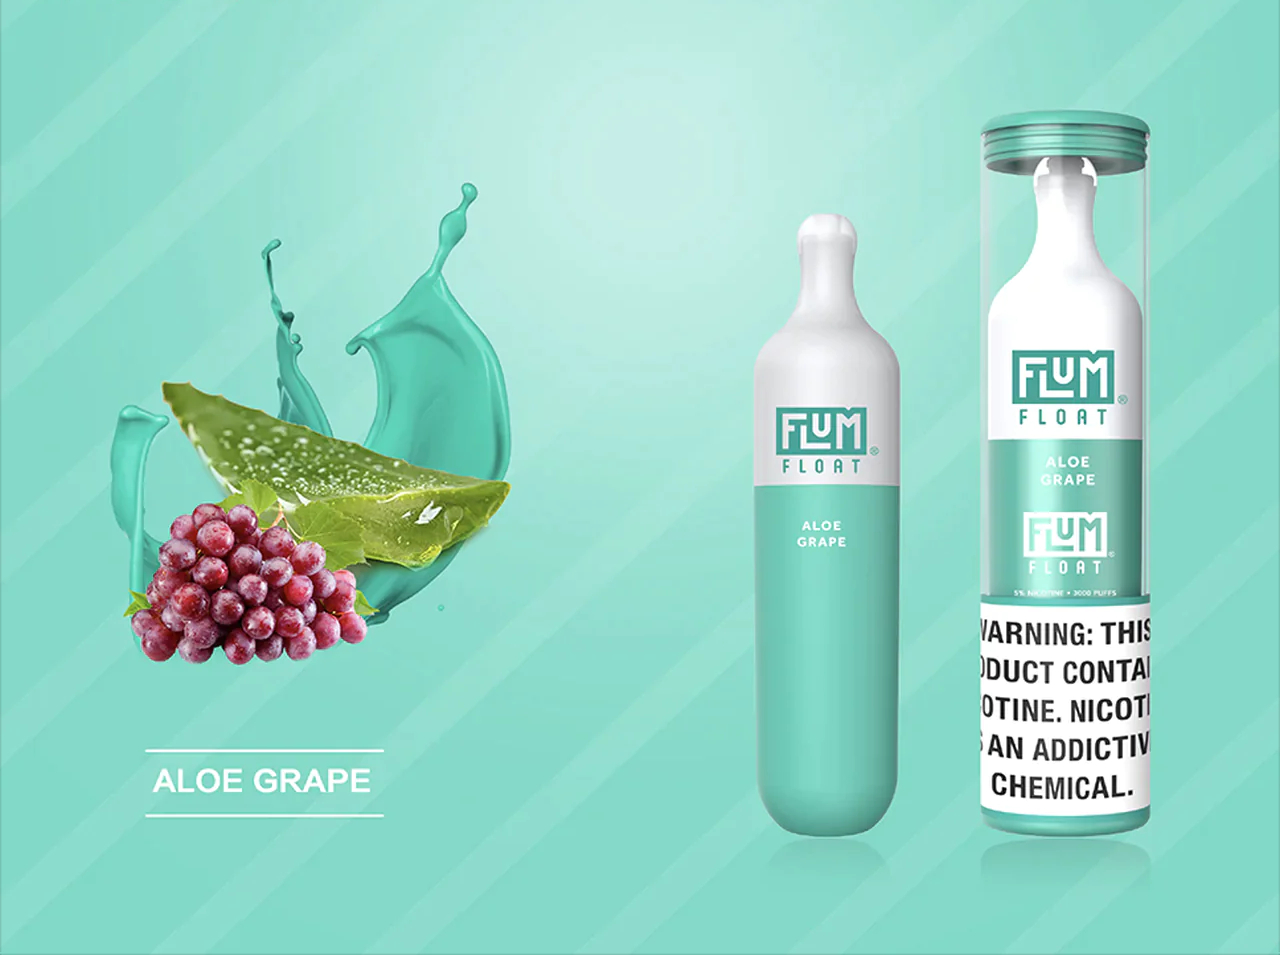 Flum Float 3000 Puffs Aloe Grape Device: A Refreshing Vaping Experience